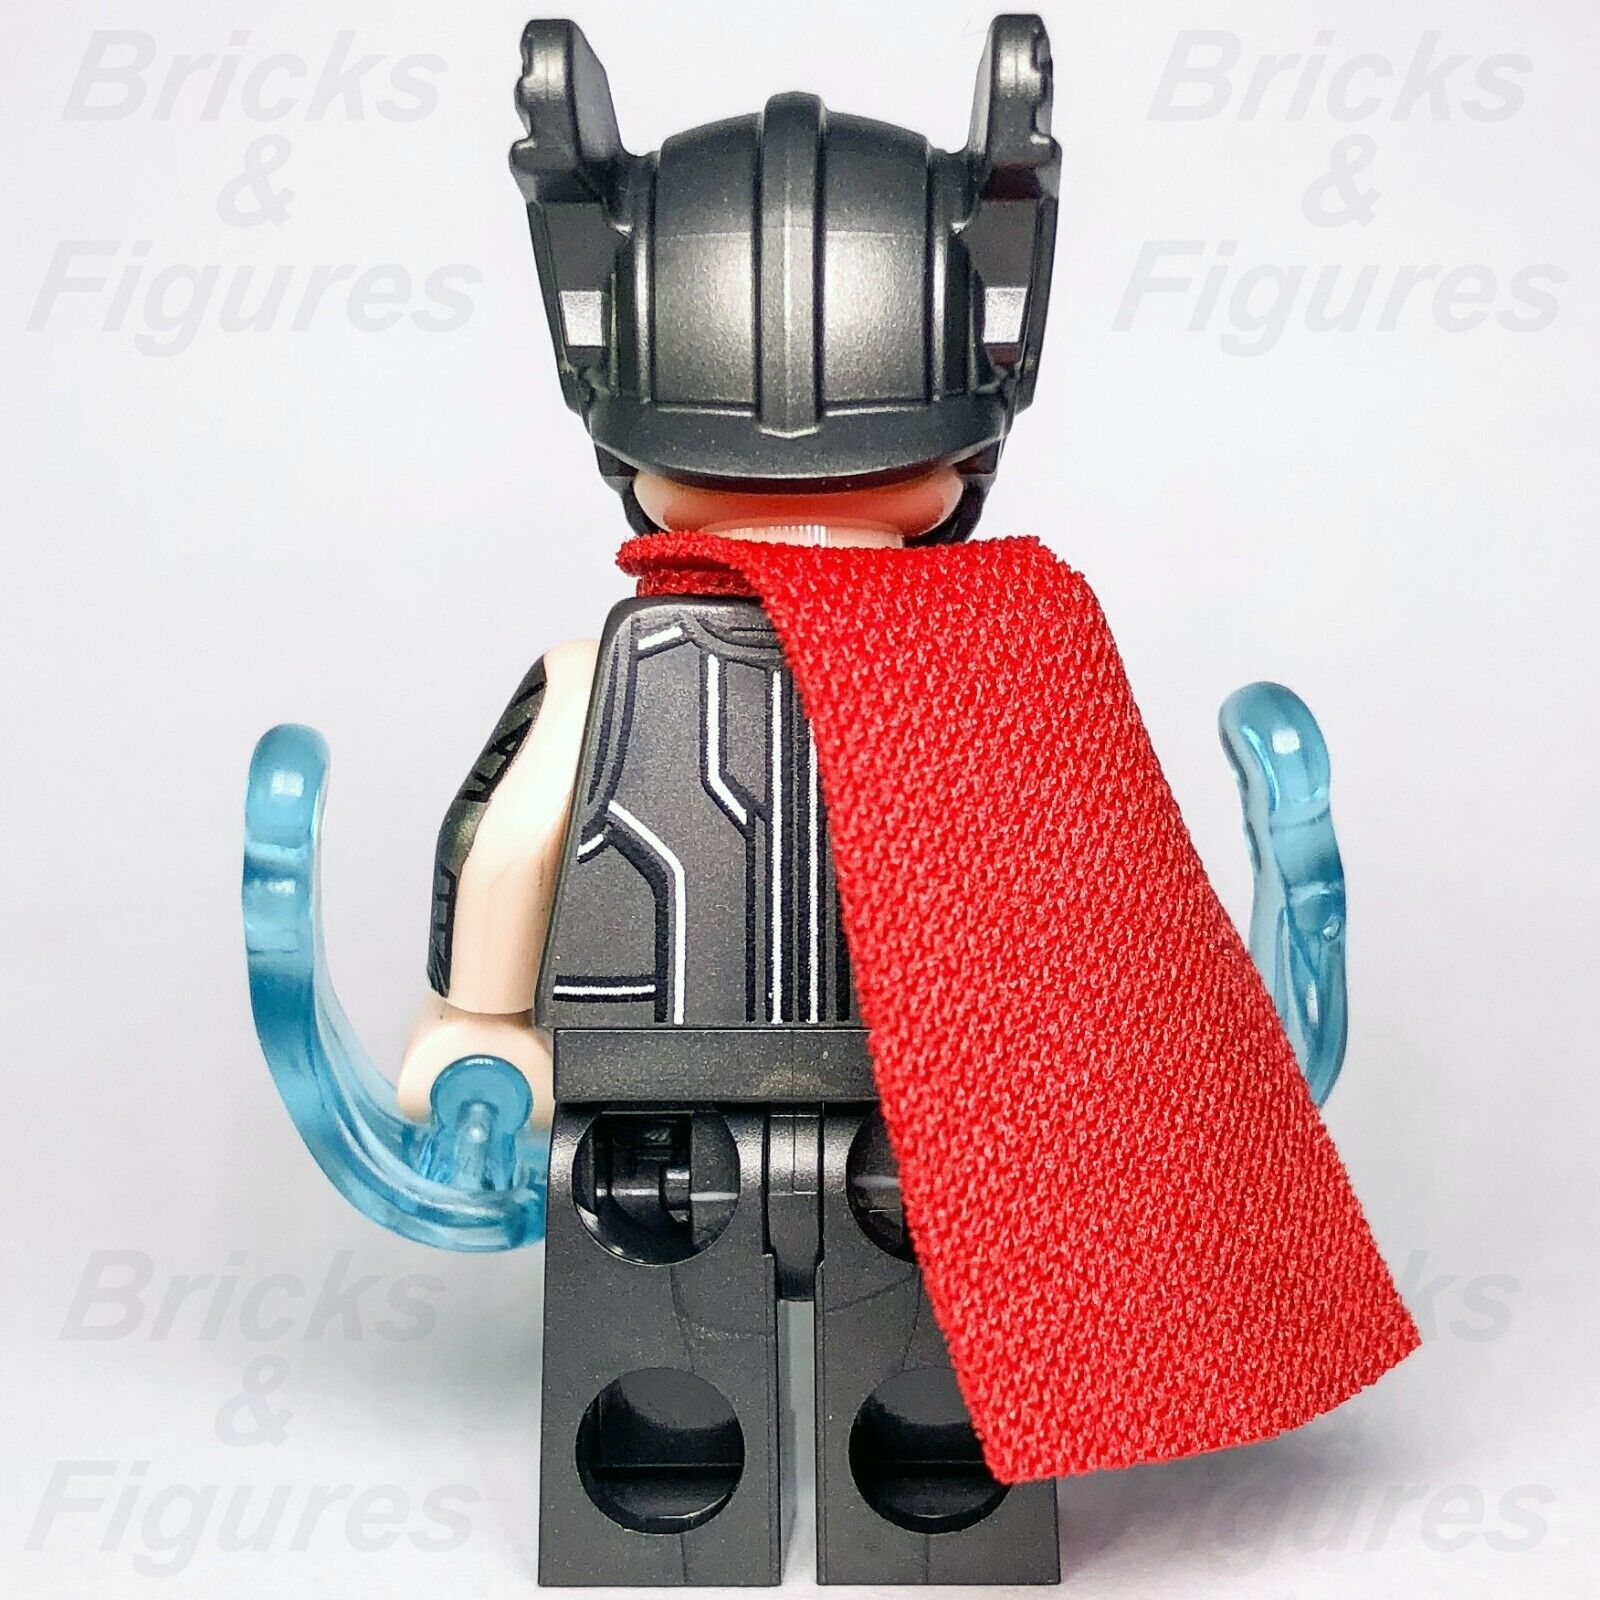 LEGO Marvel Super Heroes Thor with Red Cape Ragnarok Minifigure 76084 sh409 New - Bricks & Figures